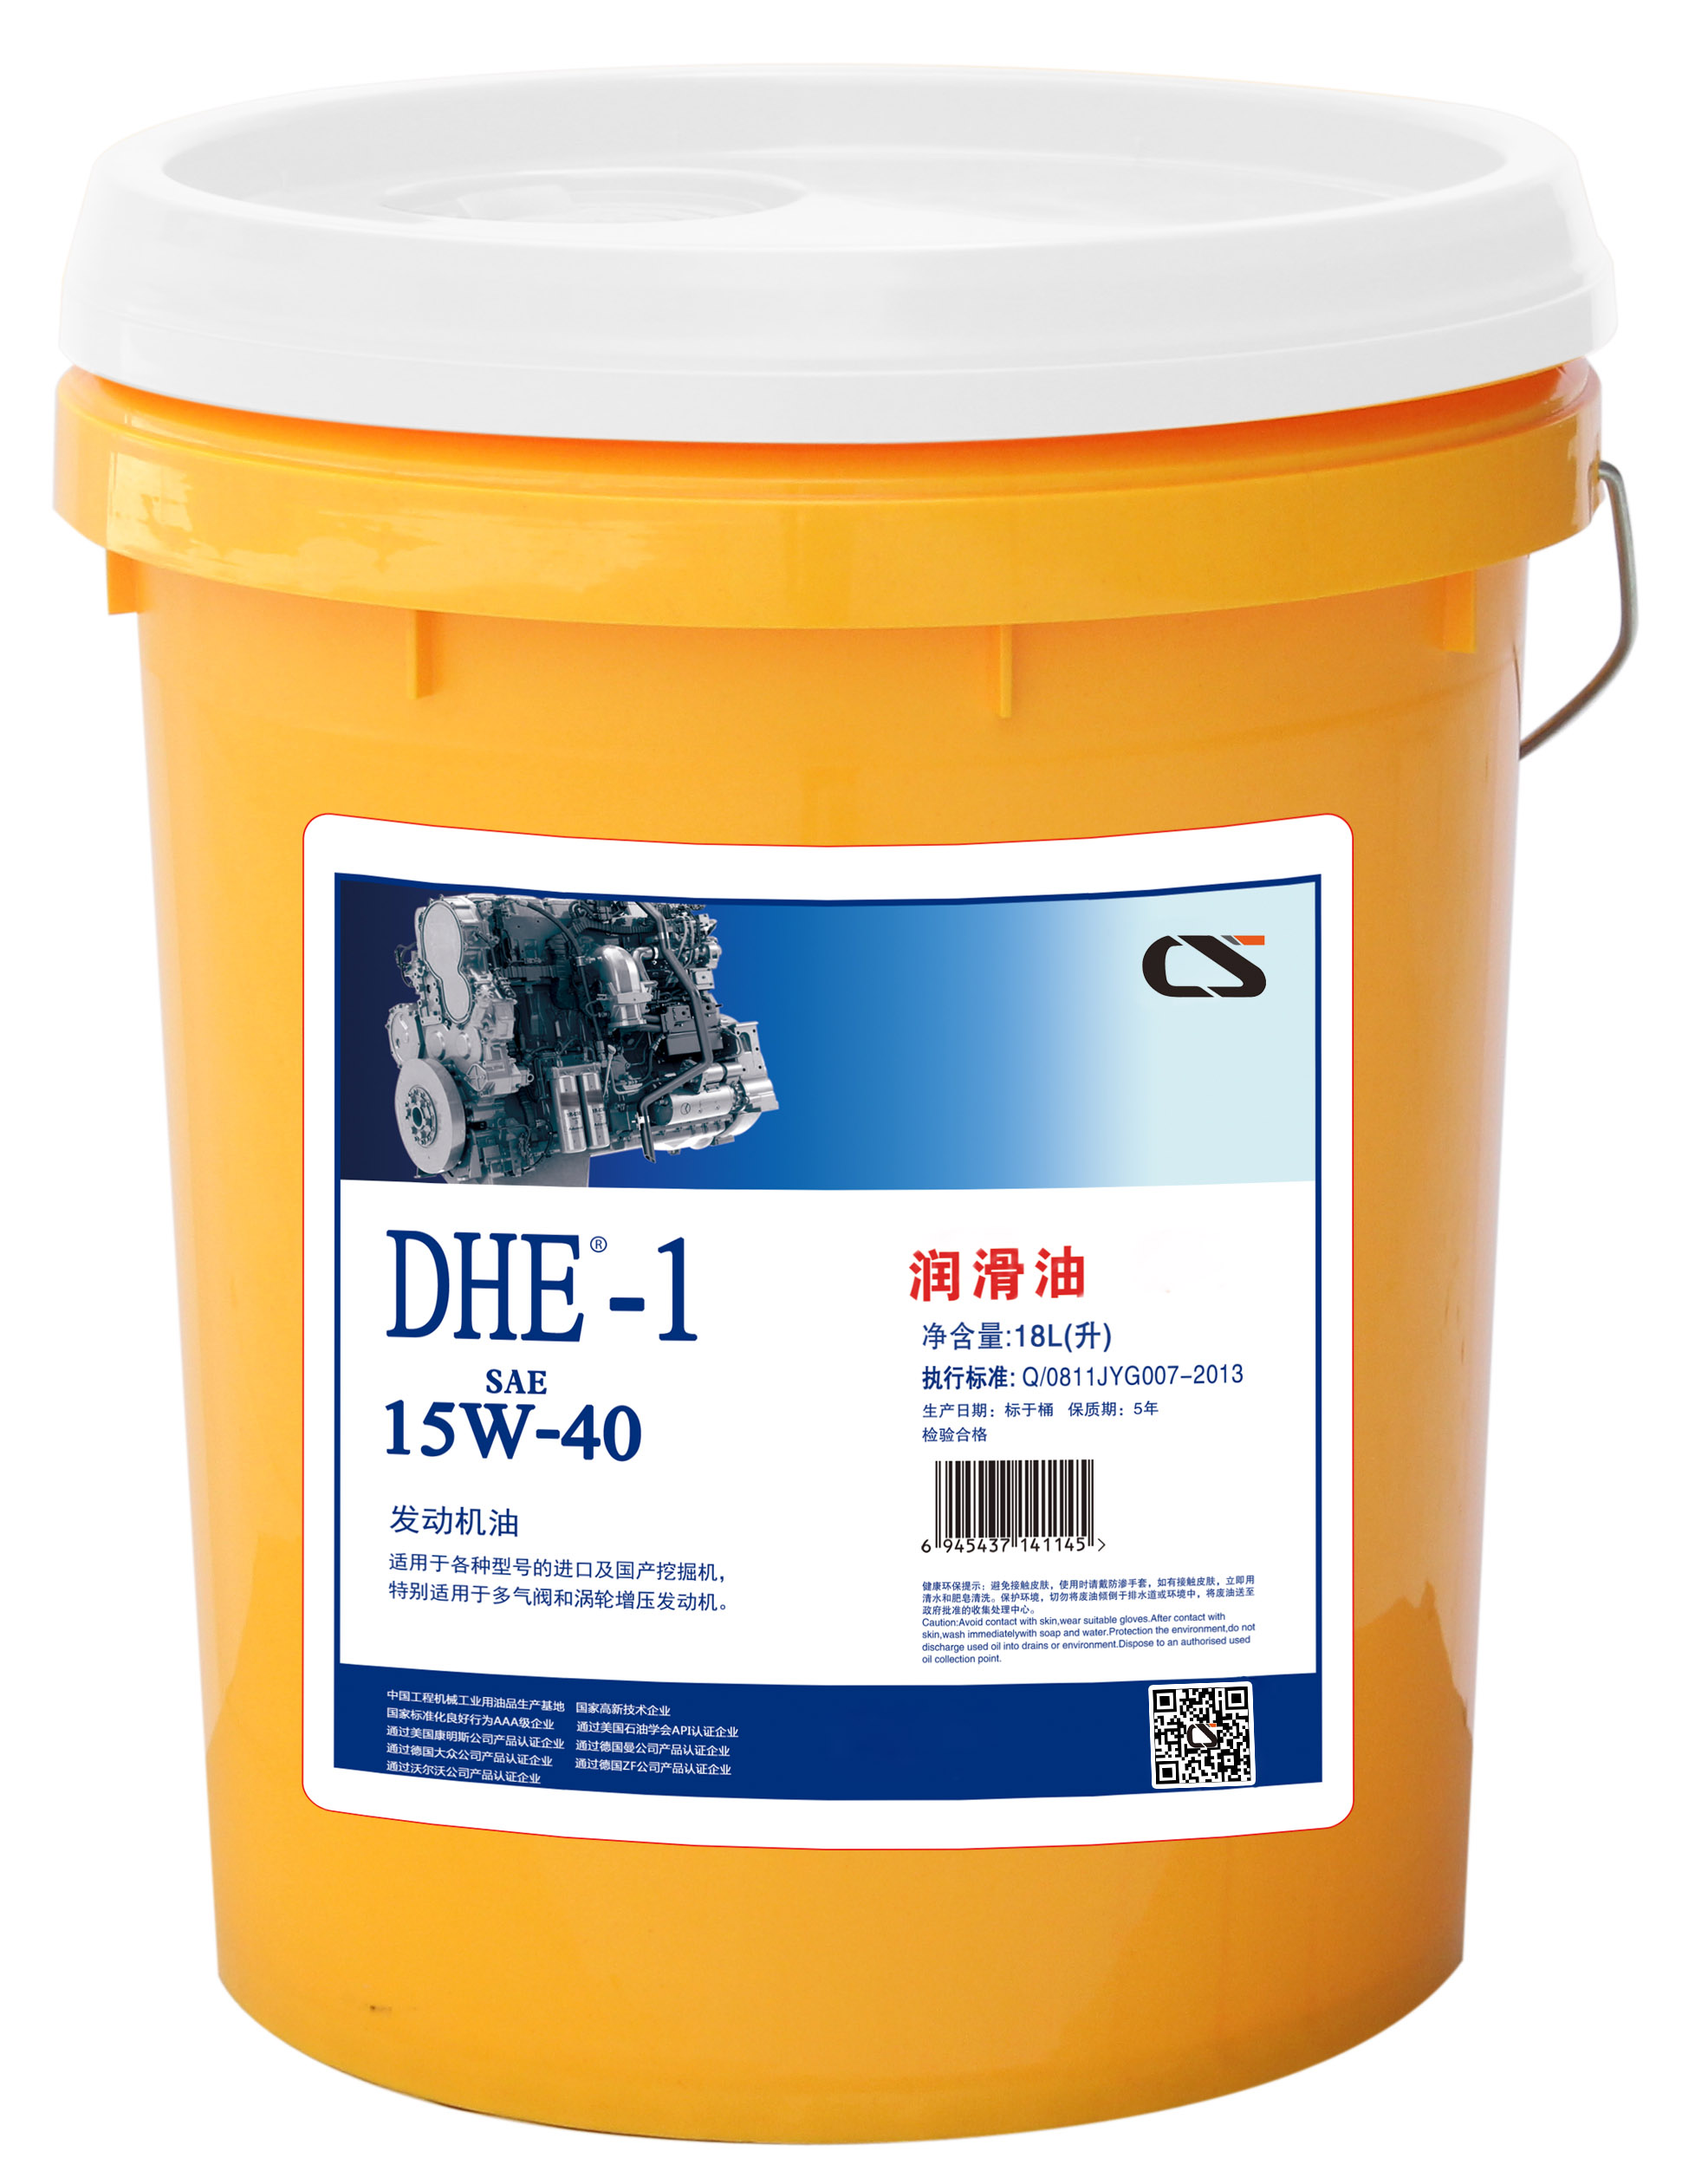 Engine oil DHE--1 SAE 15W-40